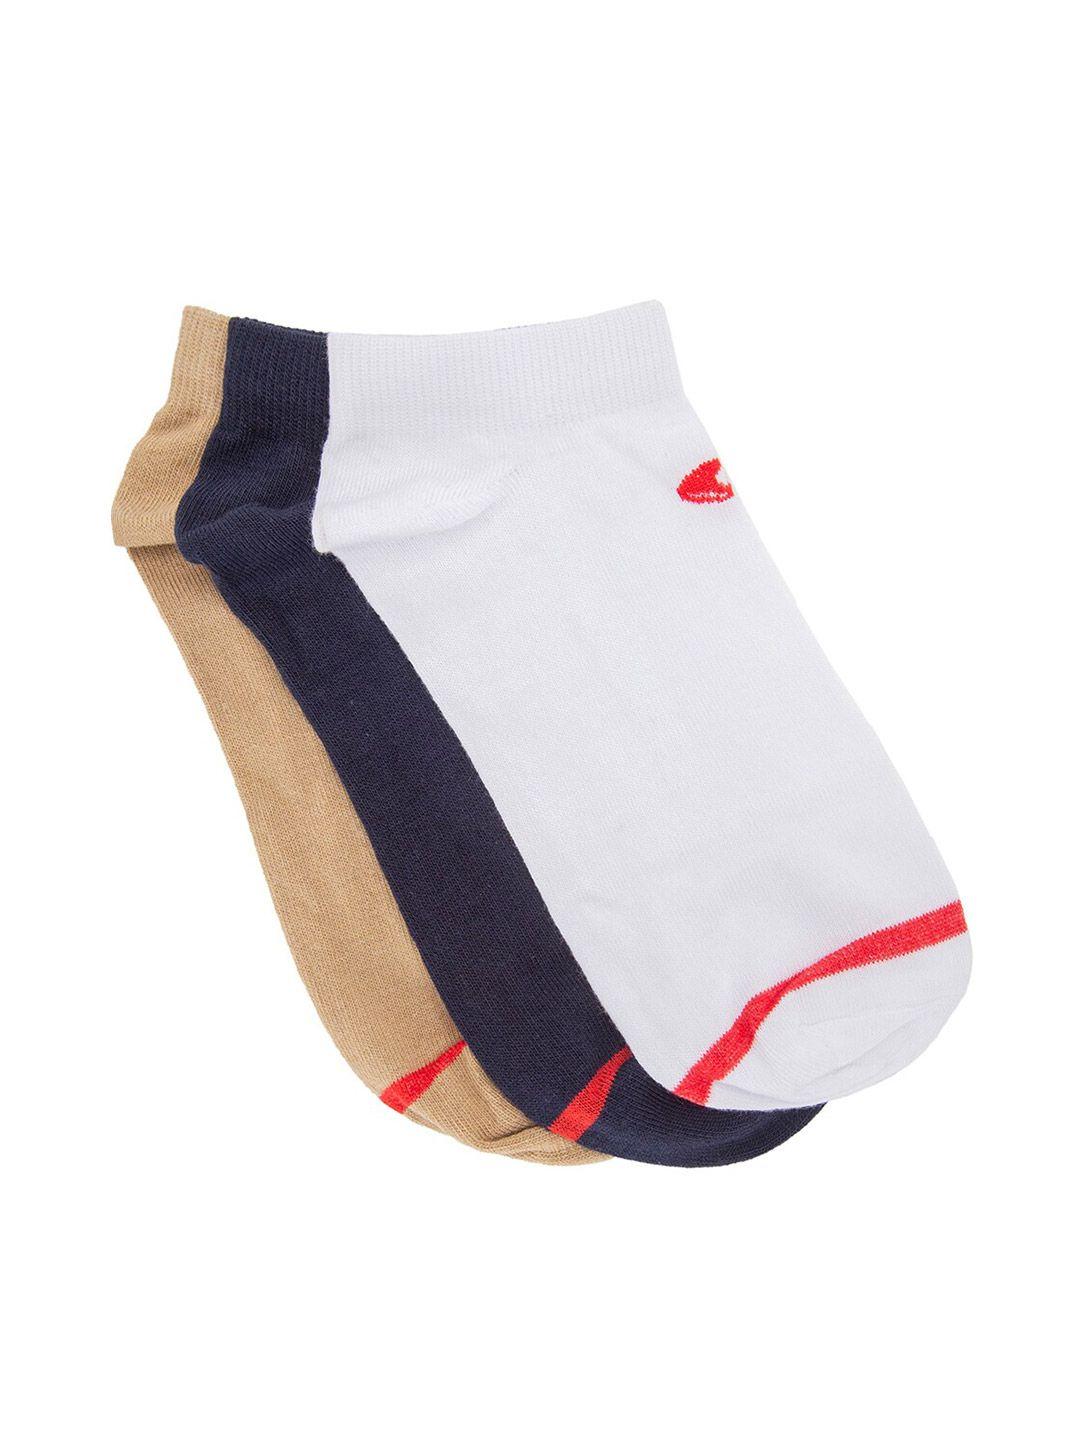 allen-cooper-men-pack-of-3-assorted-ankle-length-cotton-socks